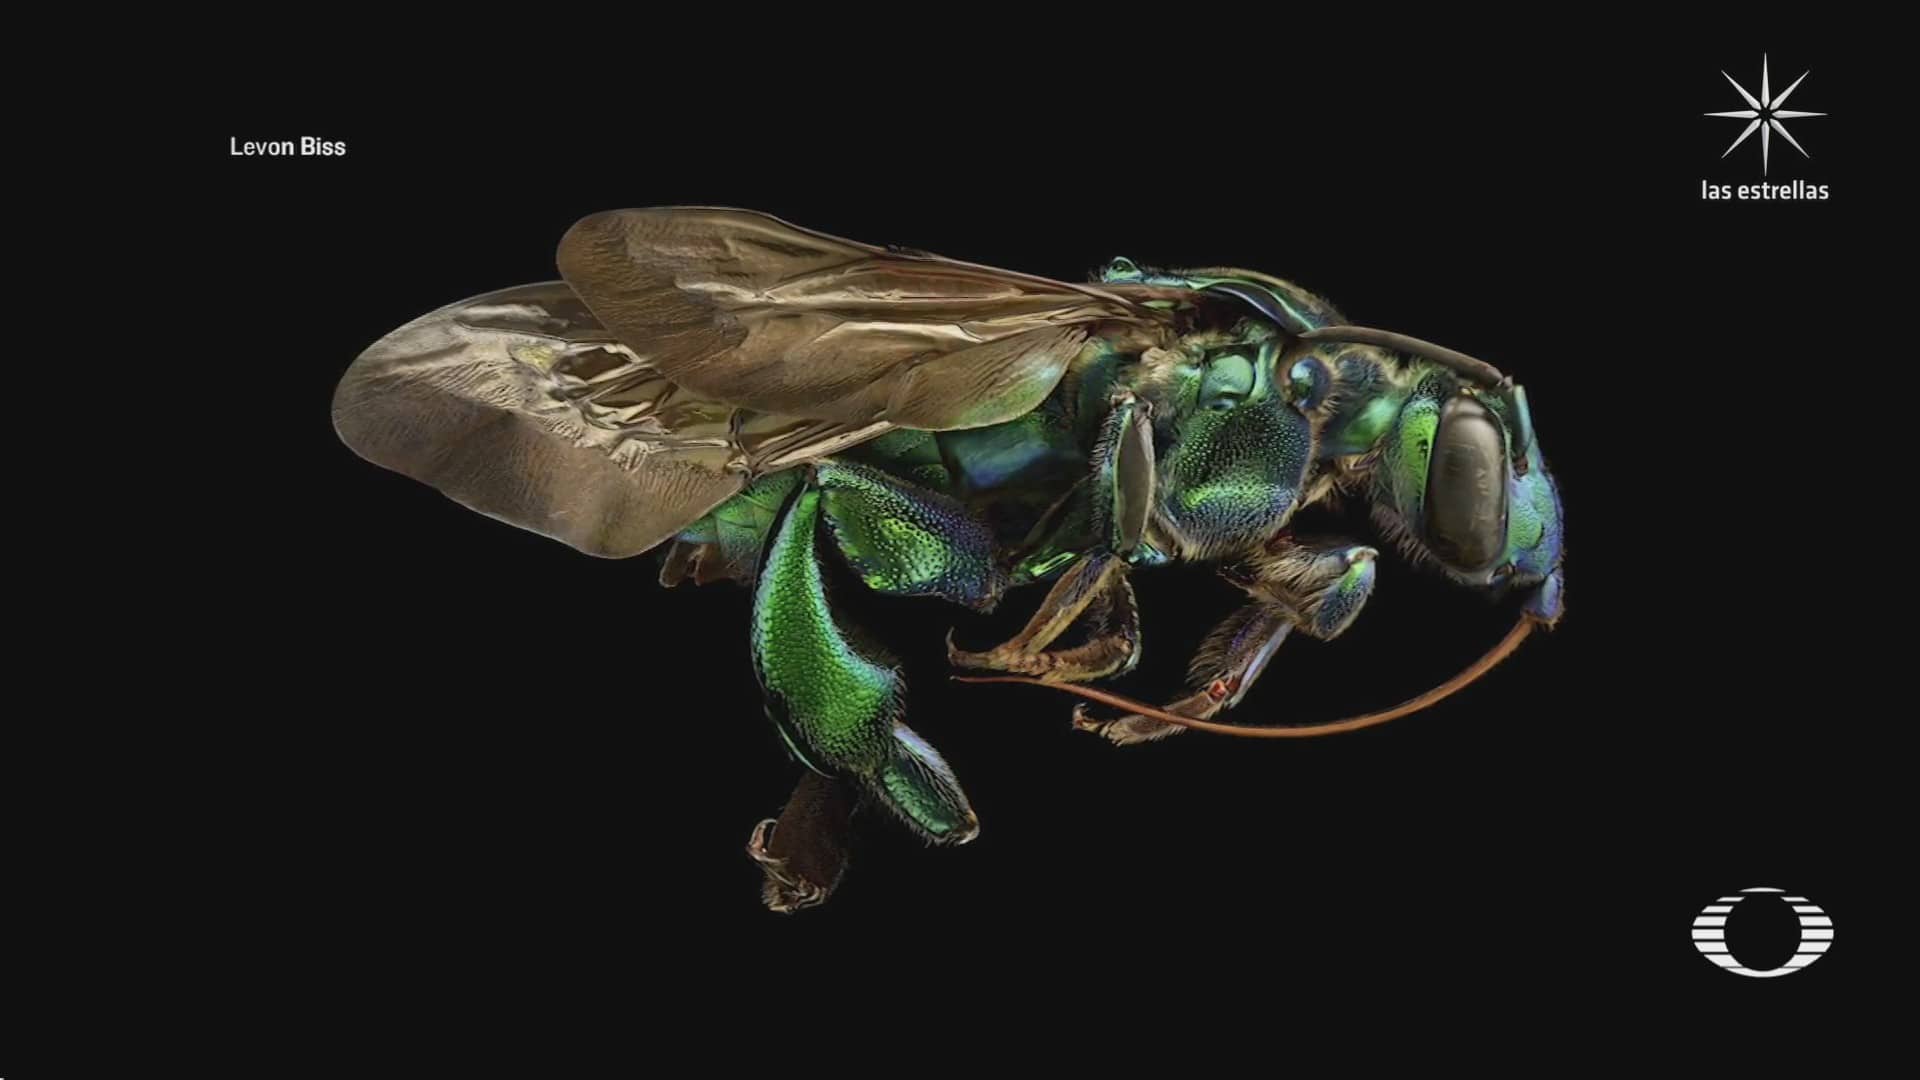 fotografo londinense captura impresionantes imagenes de insectos